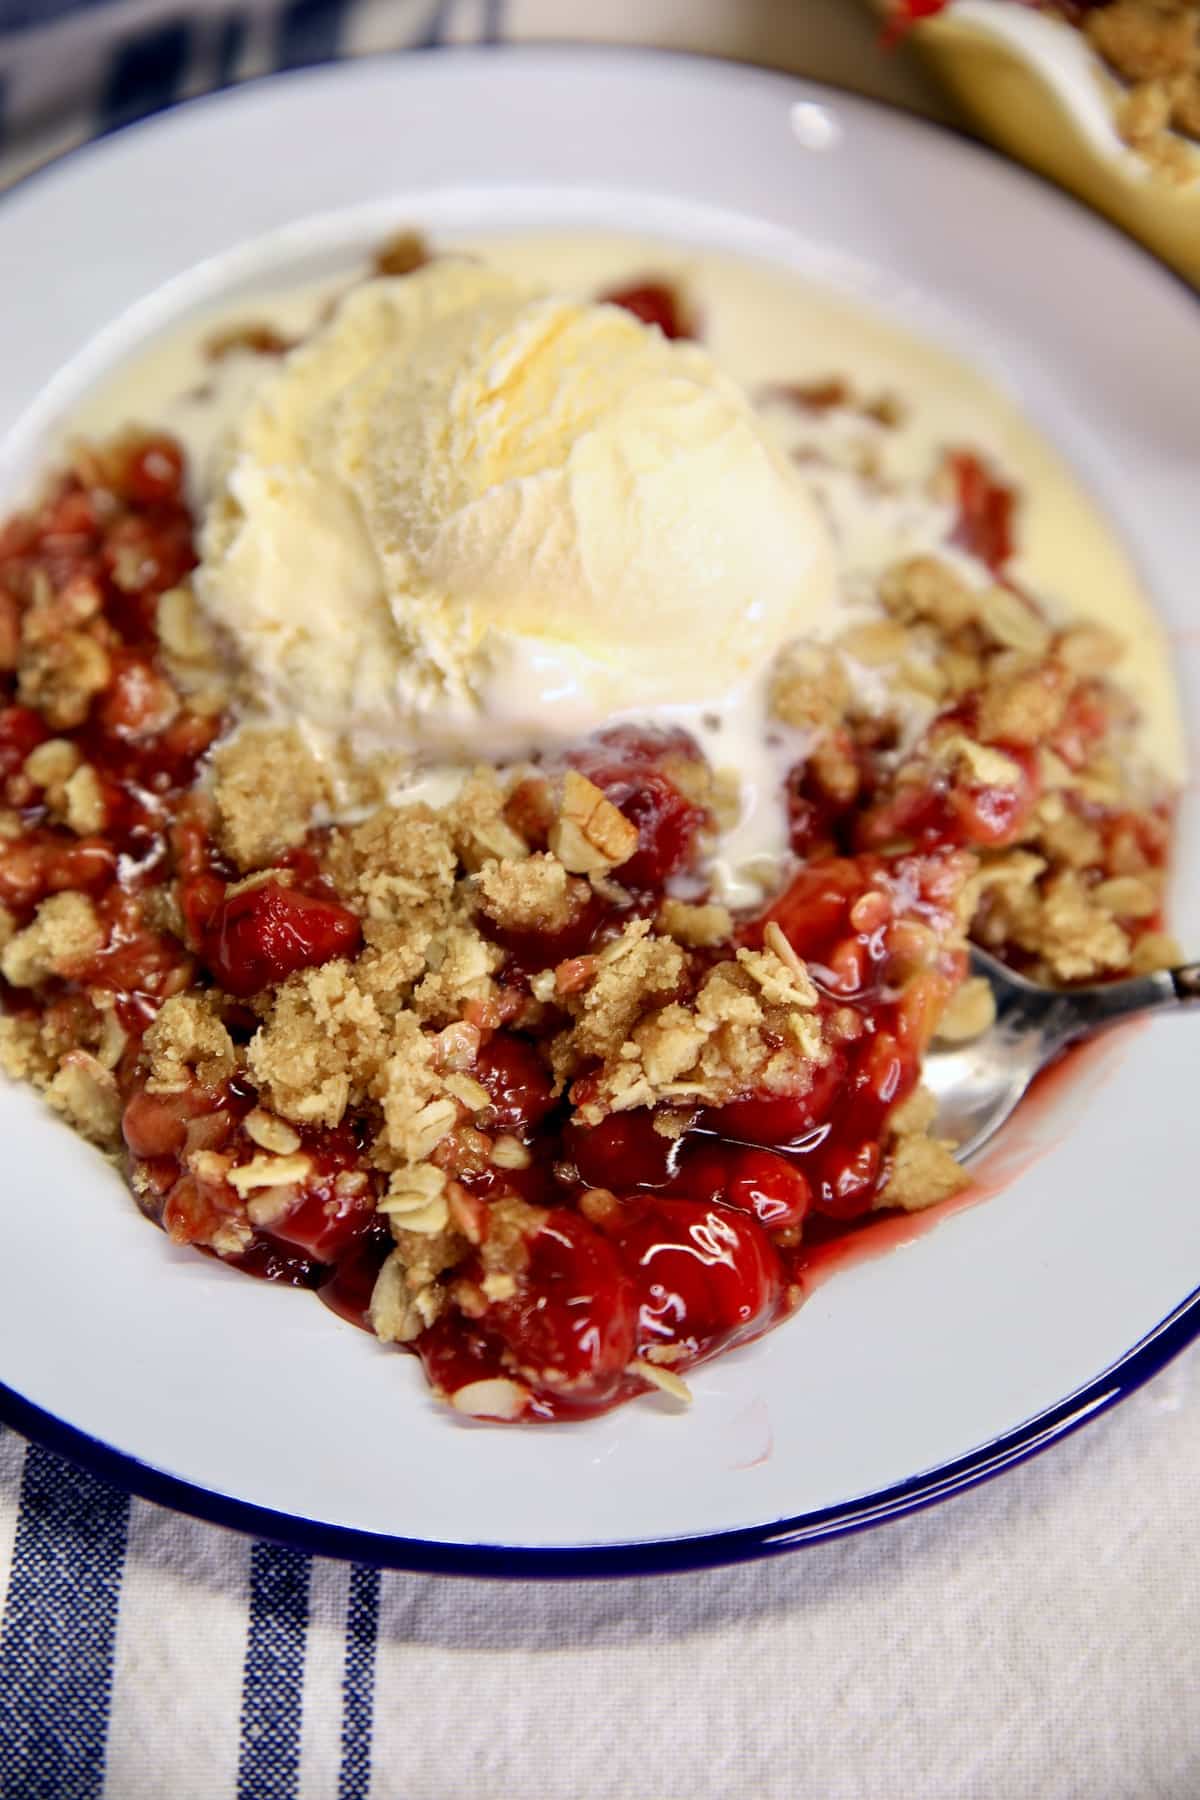 Cherry crisp with vanilla ice cream on a dessert plate.